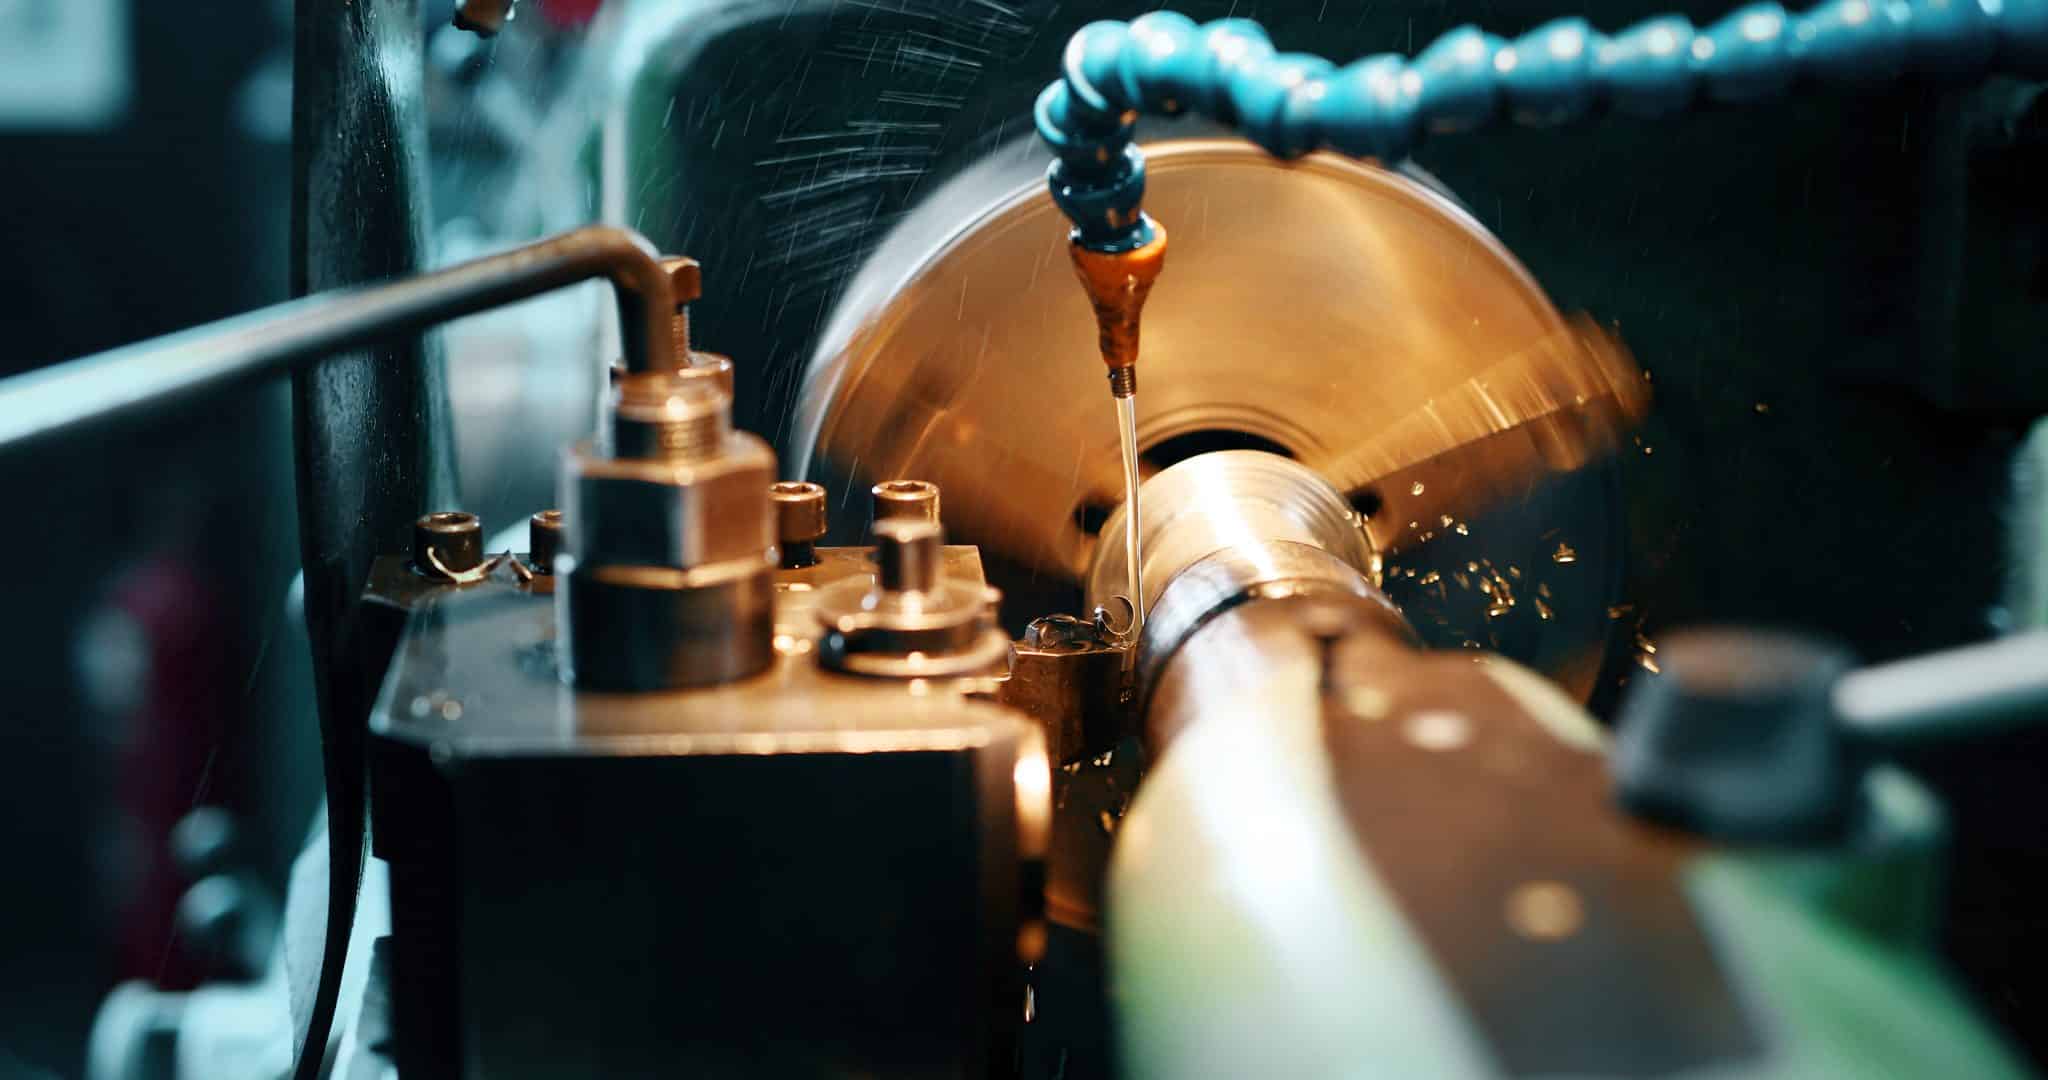 Cnc metal milling lathe machine in metal industry